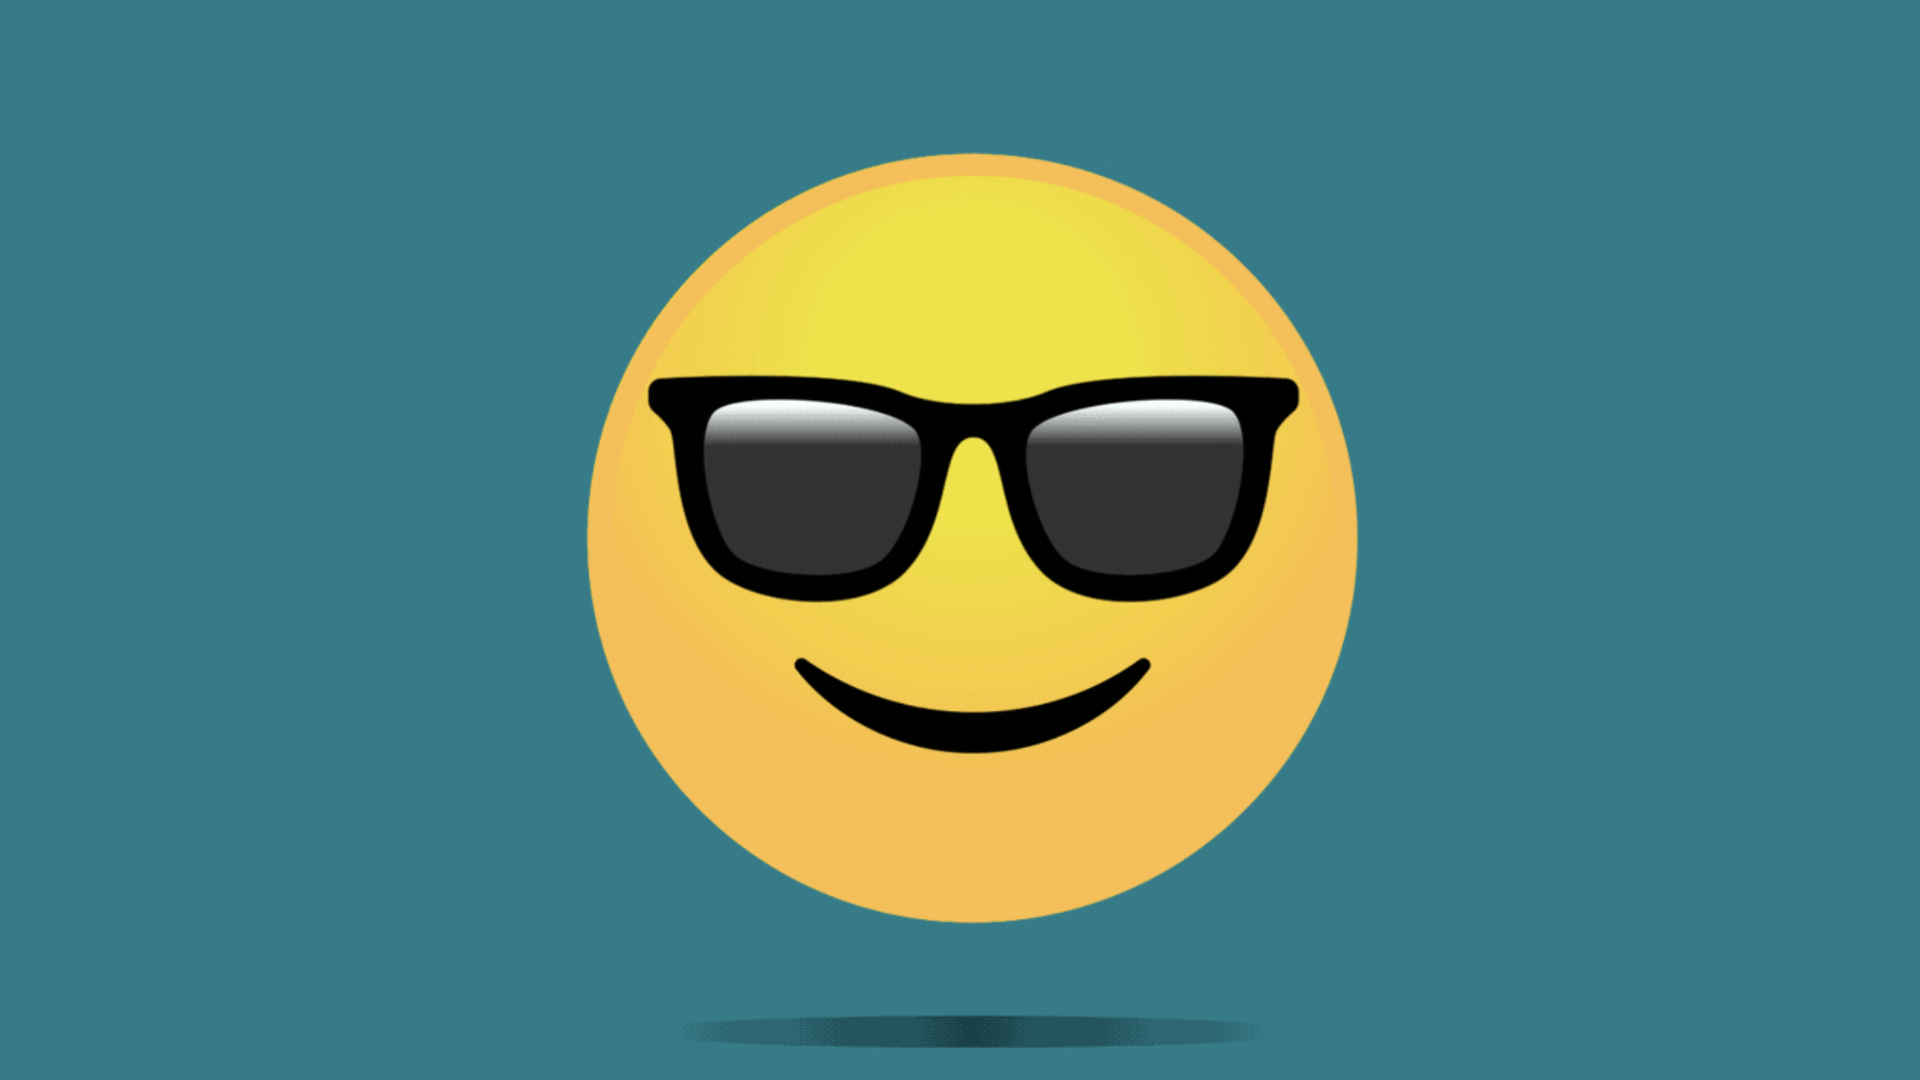 An illustration of an emoji wearing sunglasses.